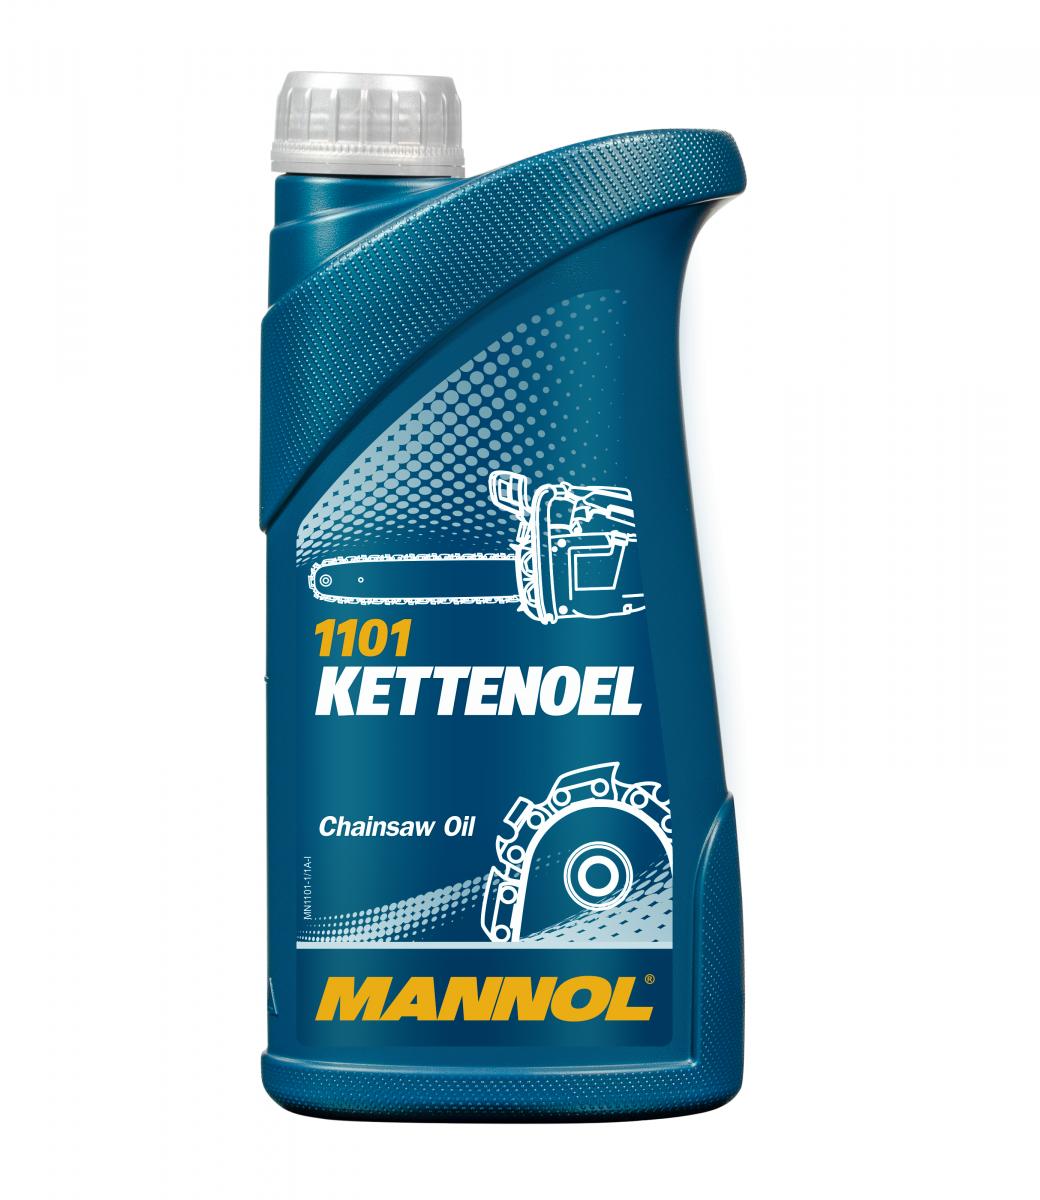 3 L (3x1) MANNOL 1101 Kettenöl mineralisches Kettenhaftöl Motorsöge Sägekettenöl